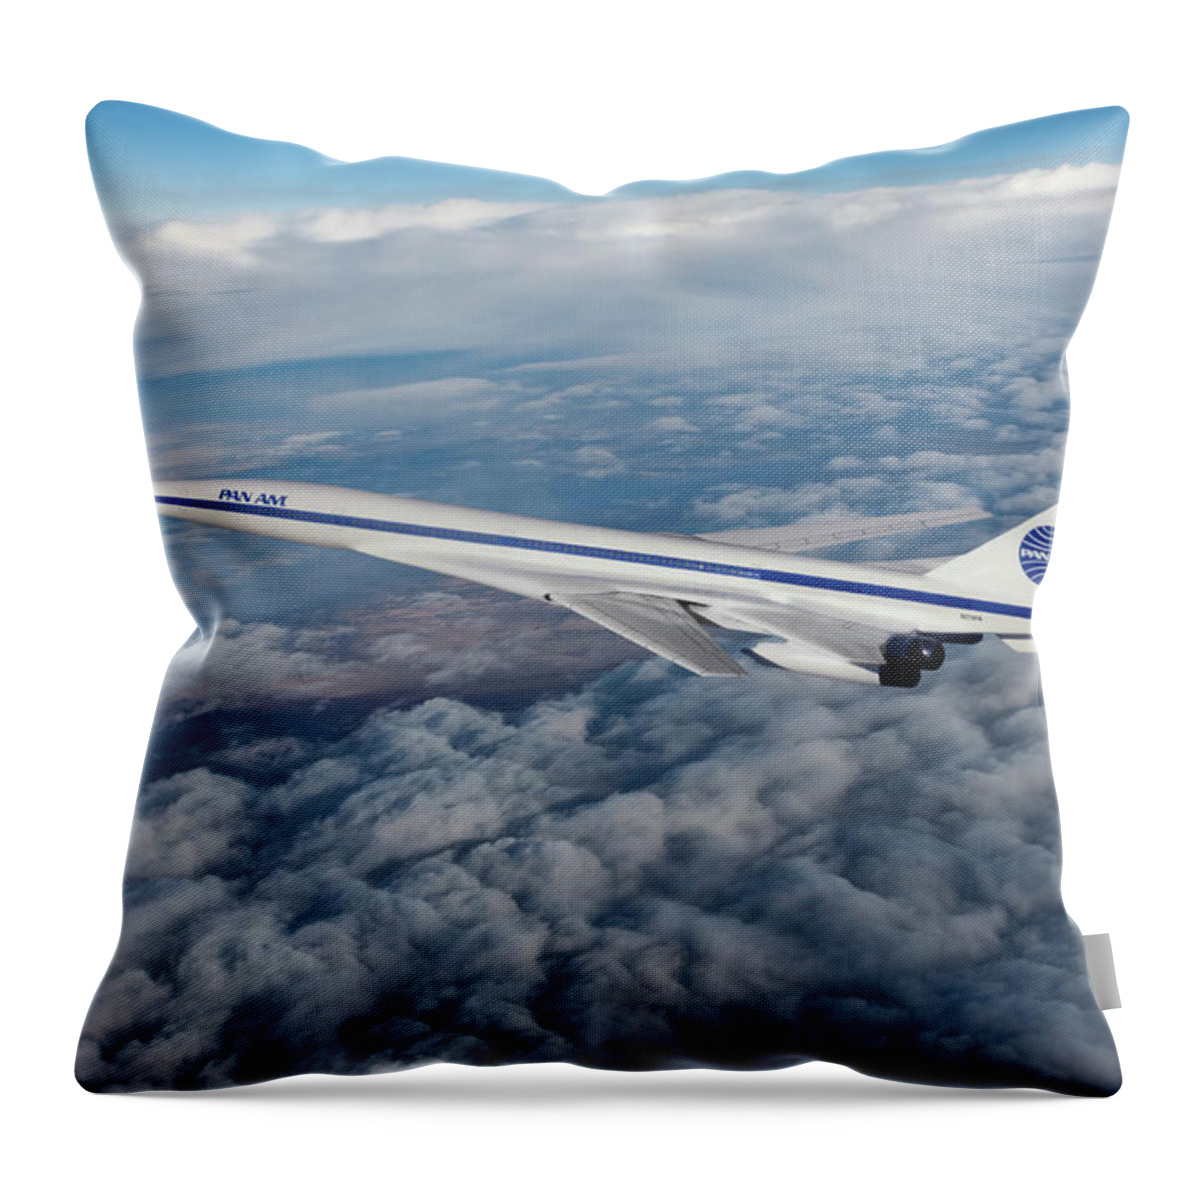 Pan American World Airways Throw Pillow featuring the digital art Pan American Supersonic Transport by Erik Simonsen